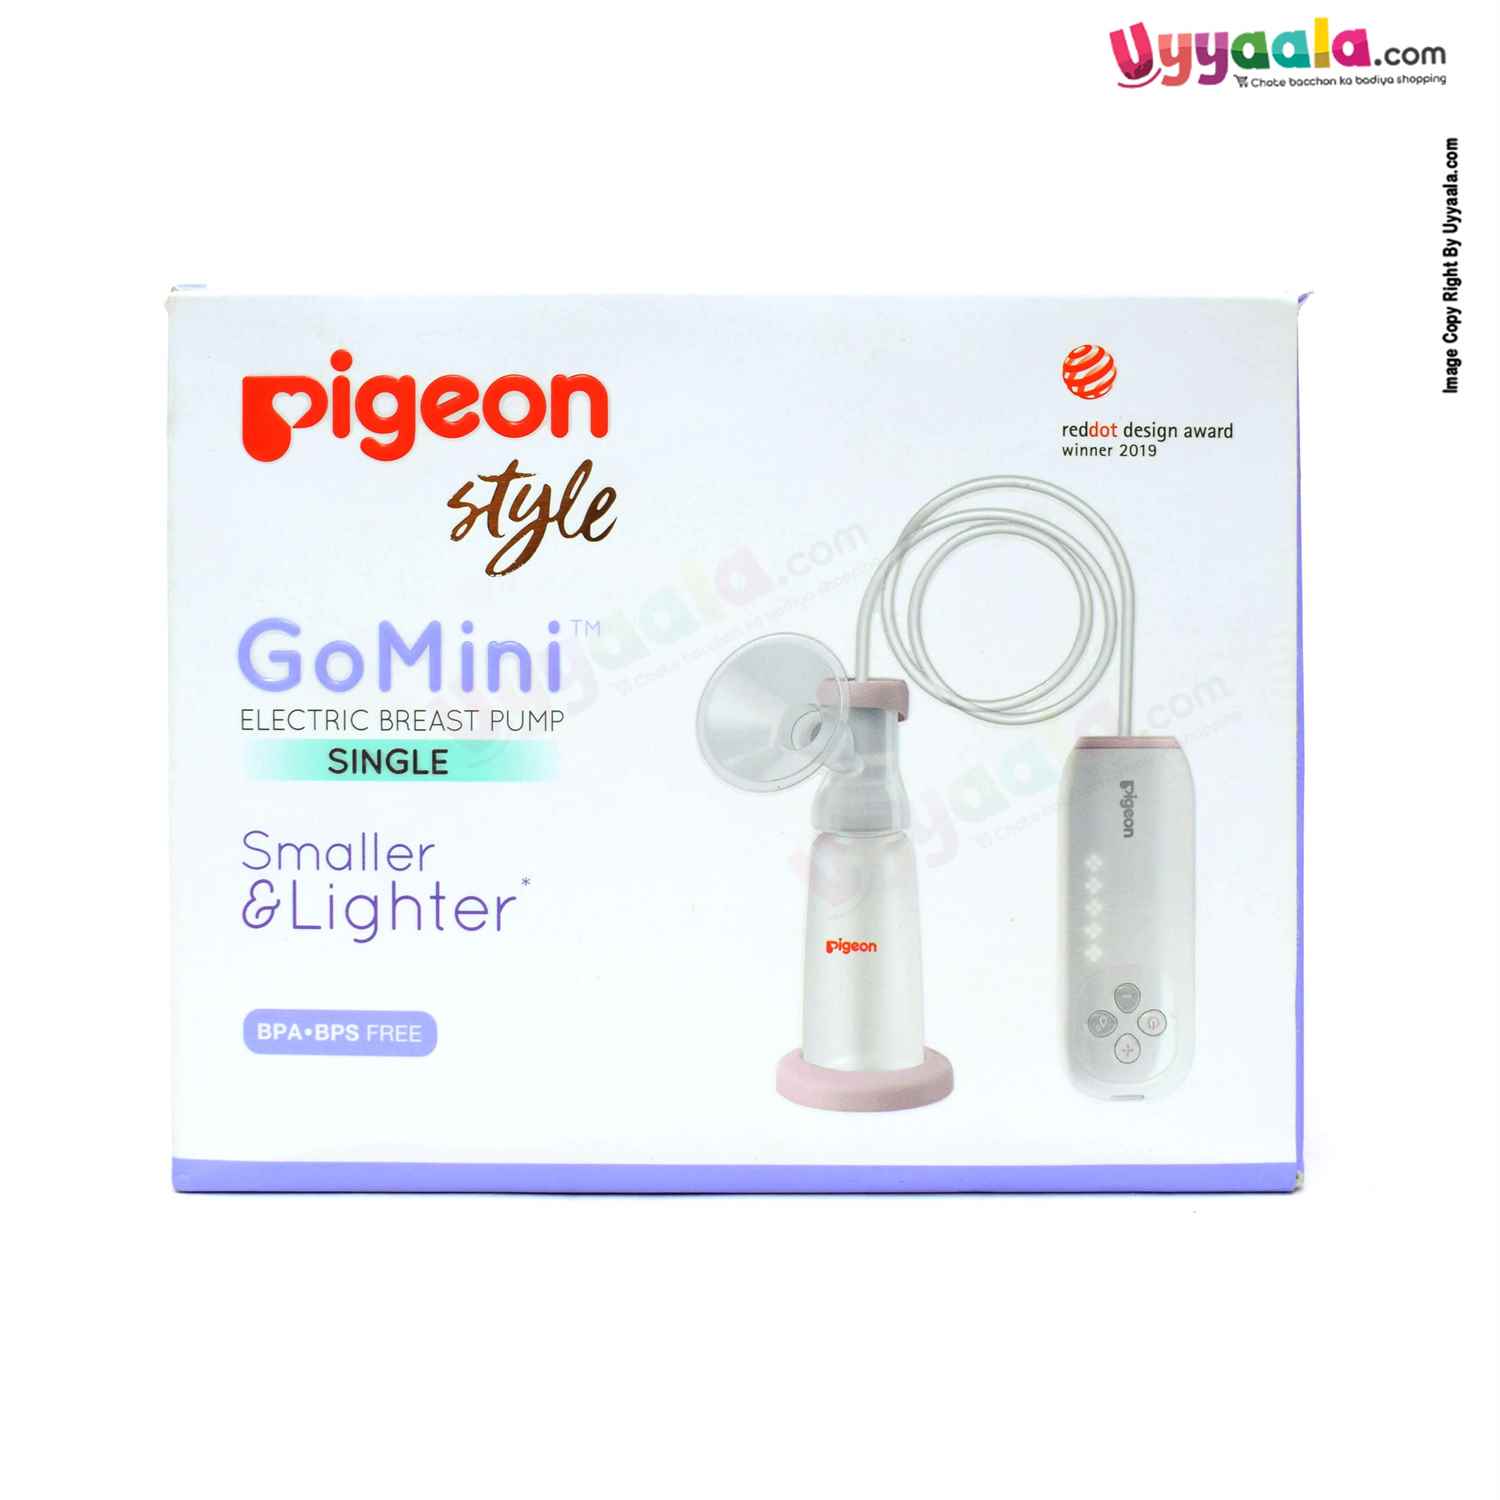 PIGEON Style Go Mini Electric Breast Pump Single